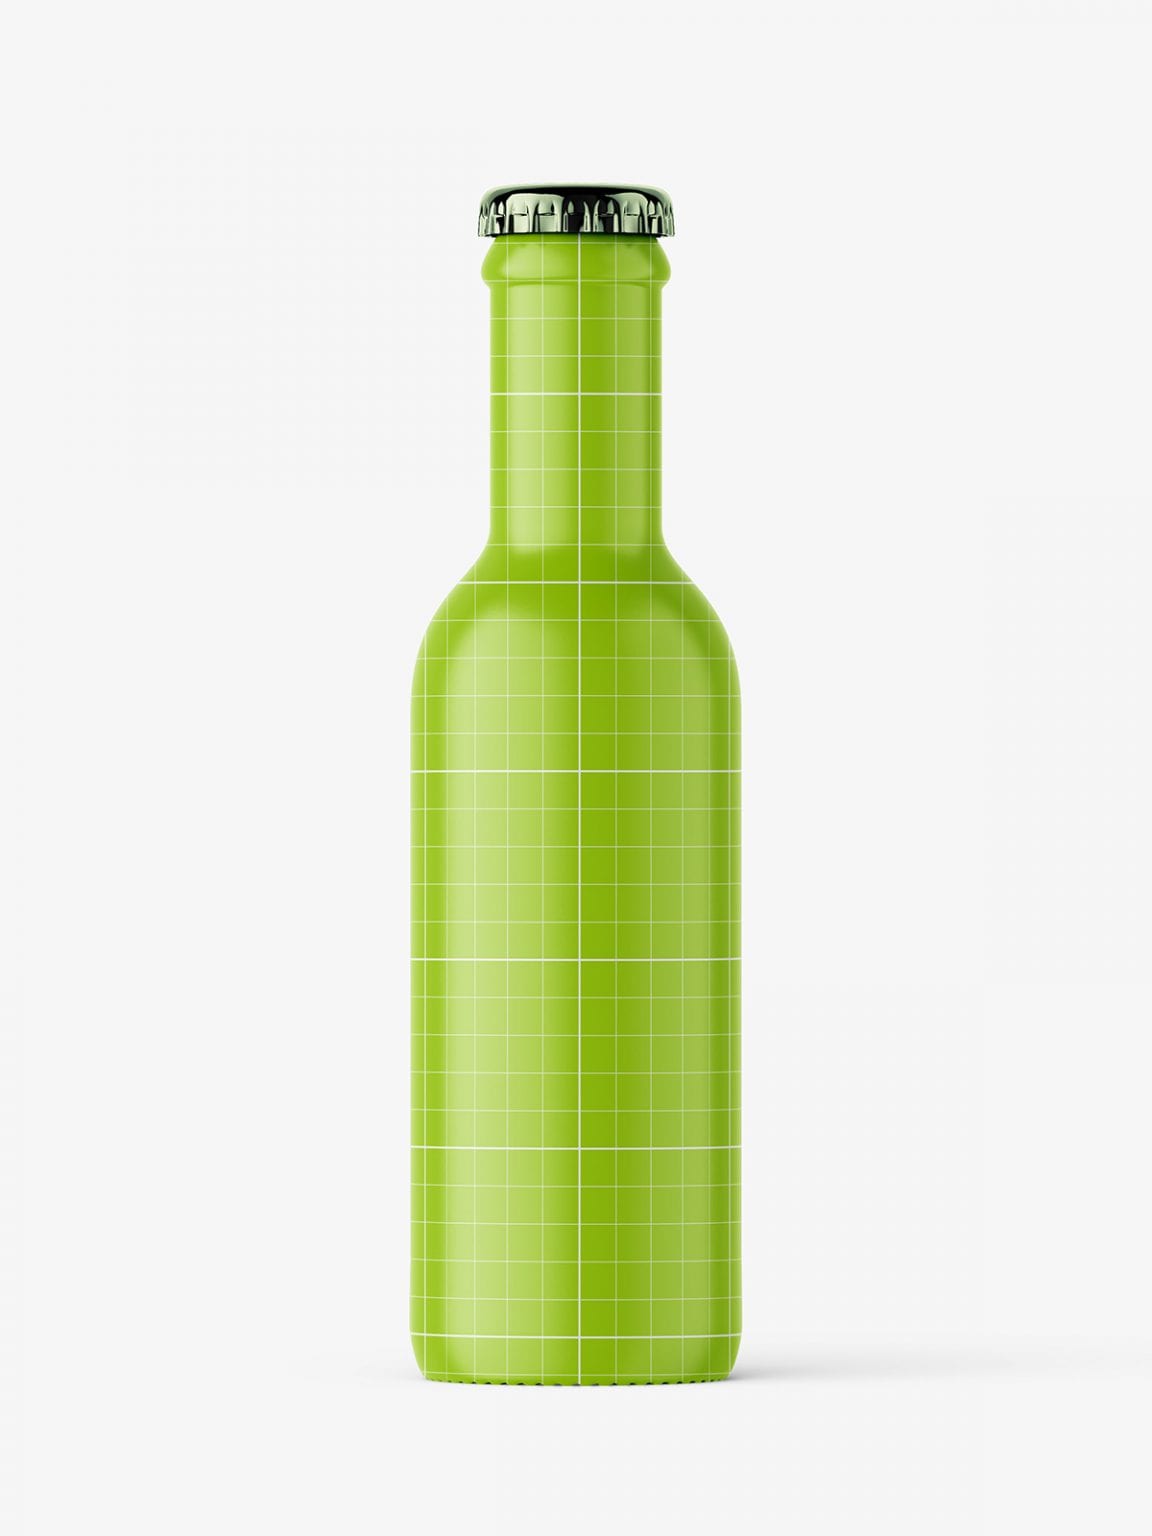 Download Clear glass bottle mockup - Smarty Mockups